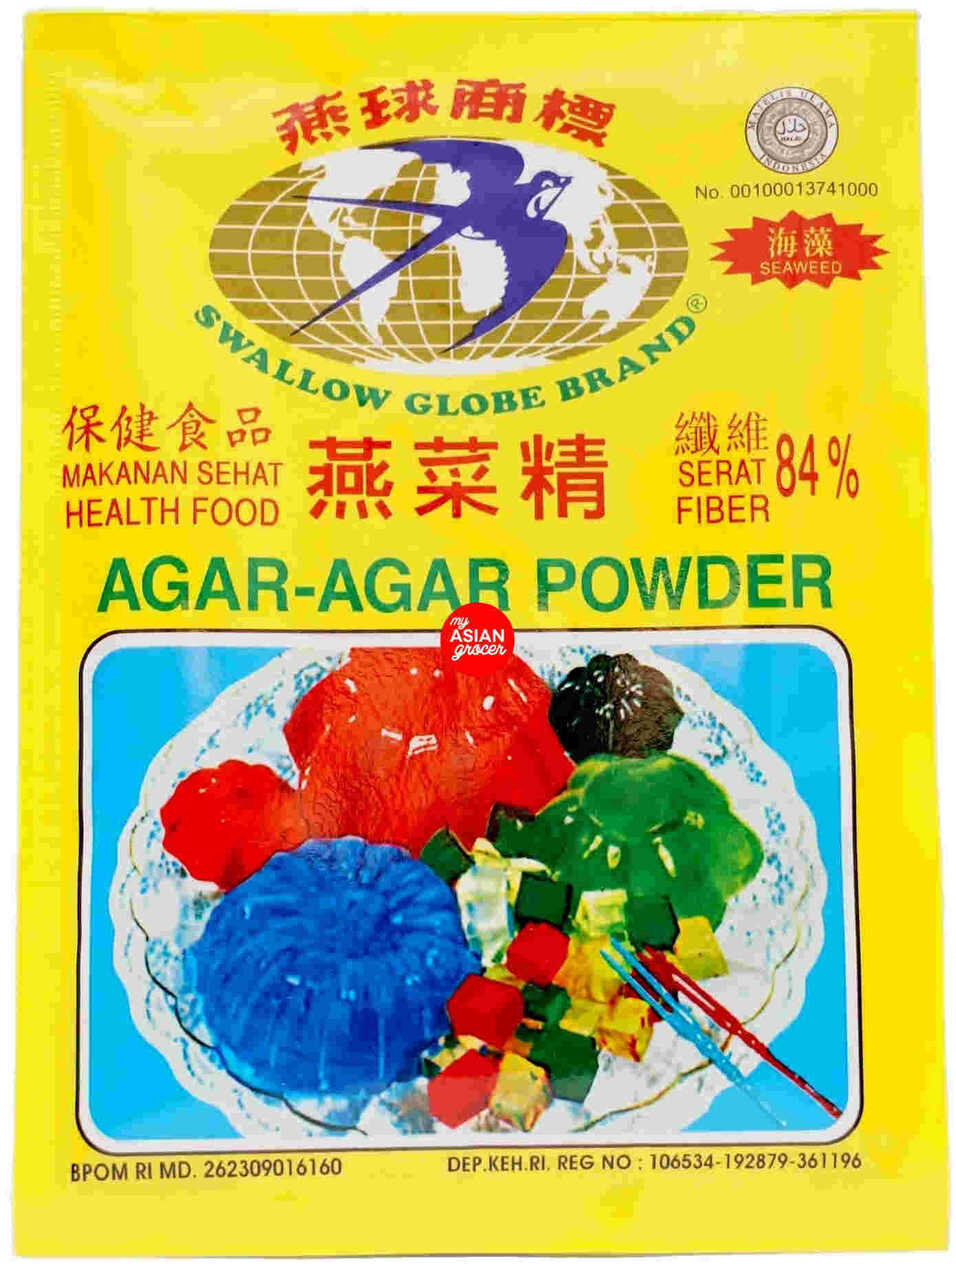 Agar-Agar Powder Swallow Globe Brand 7 gr - Chocolate/Cokelat